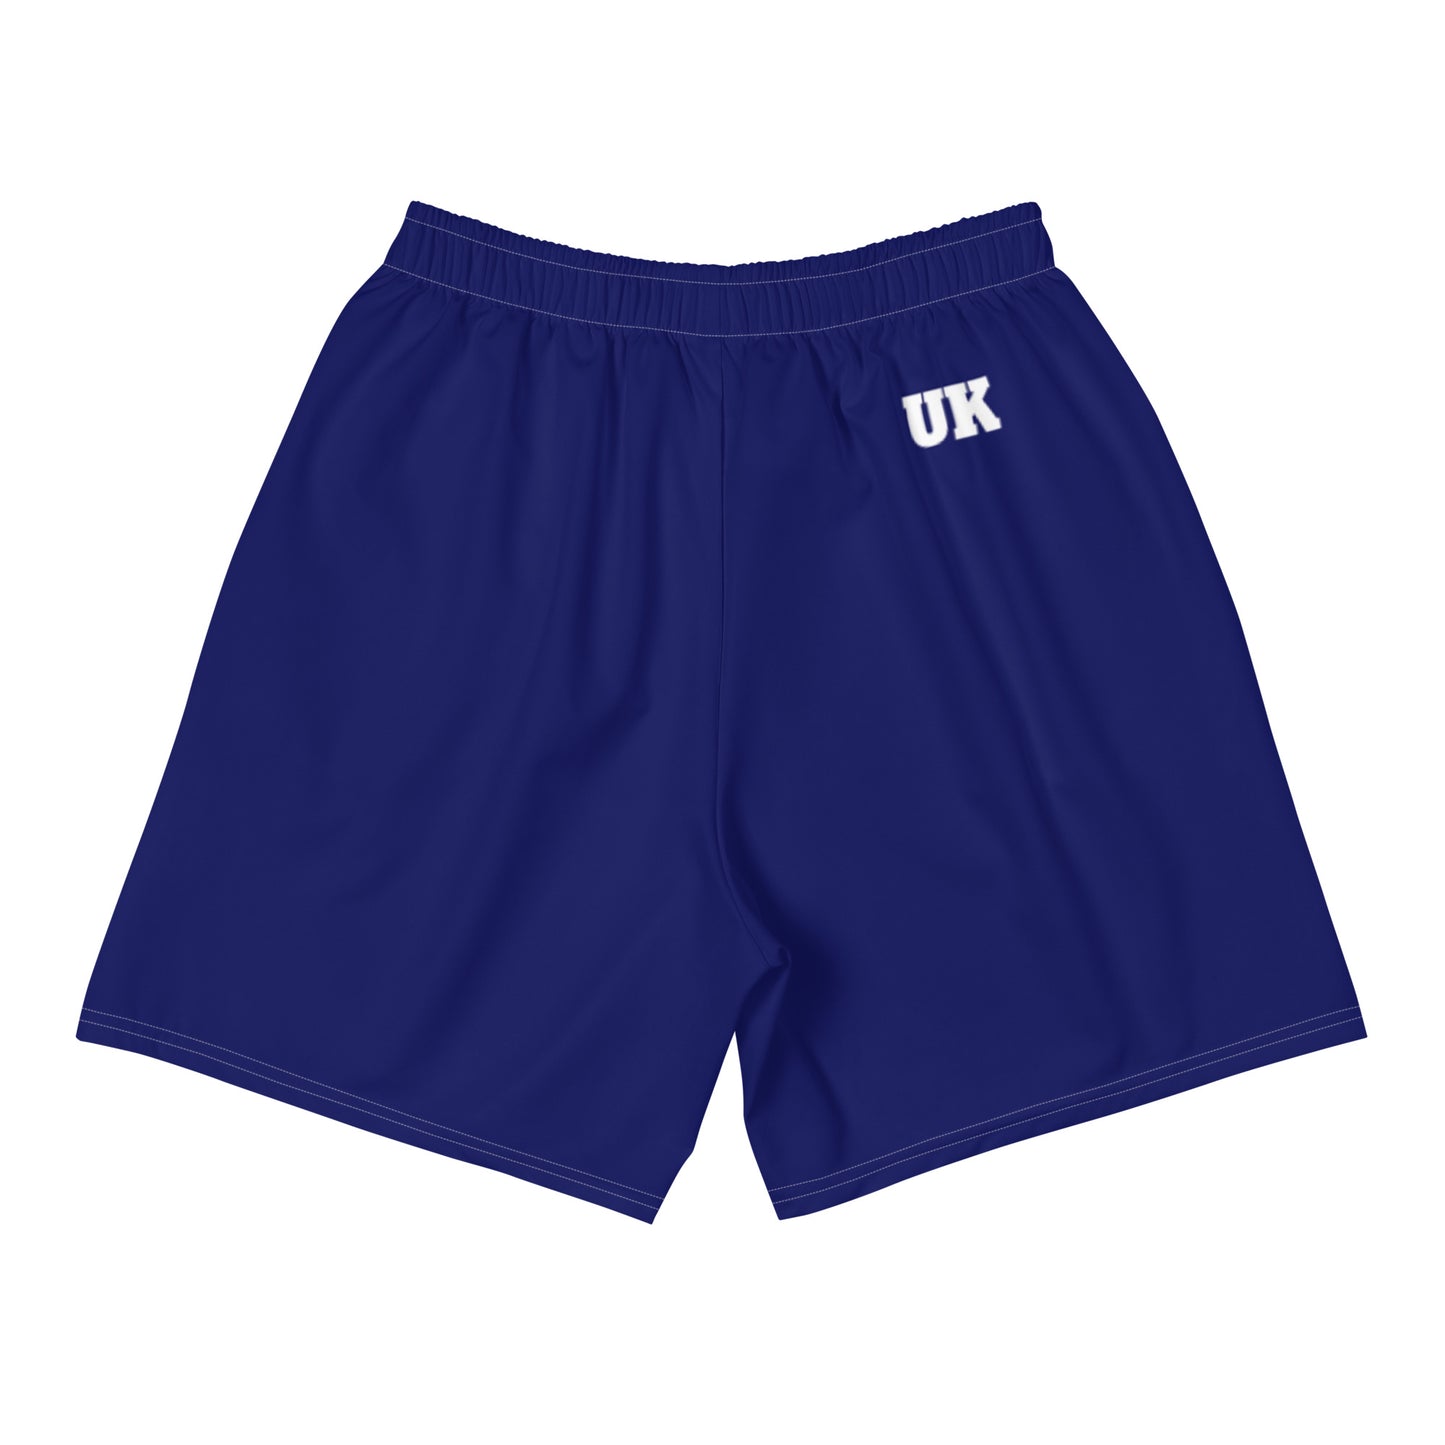 Union Jack Shorts Hombres / Union Jack Ropa / Ropa Británica / Ropa Patriota / Ecológico